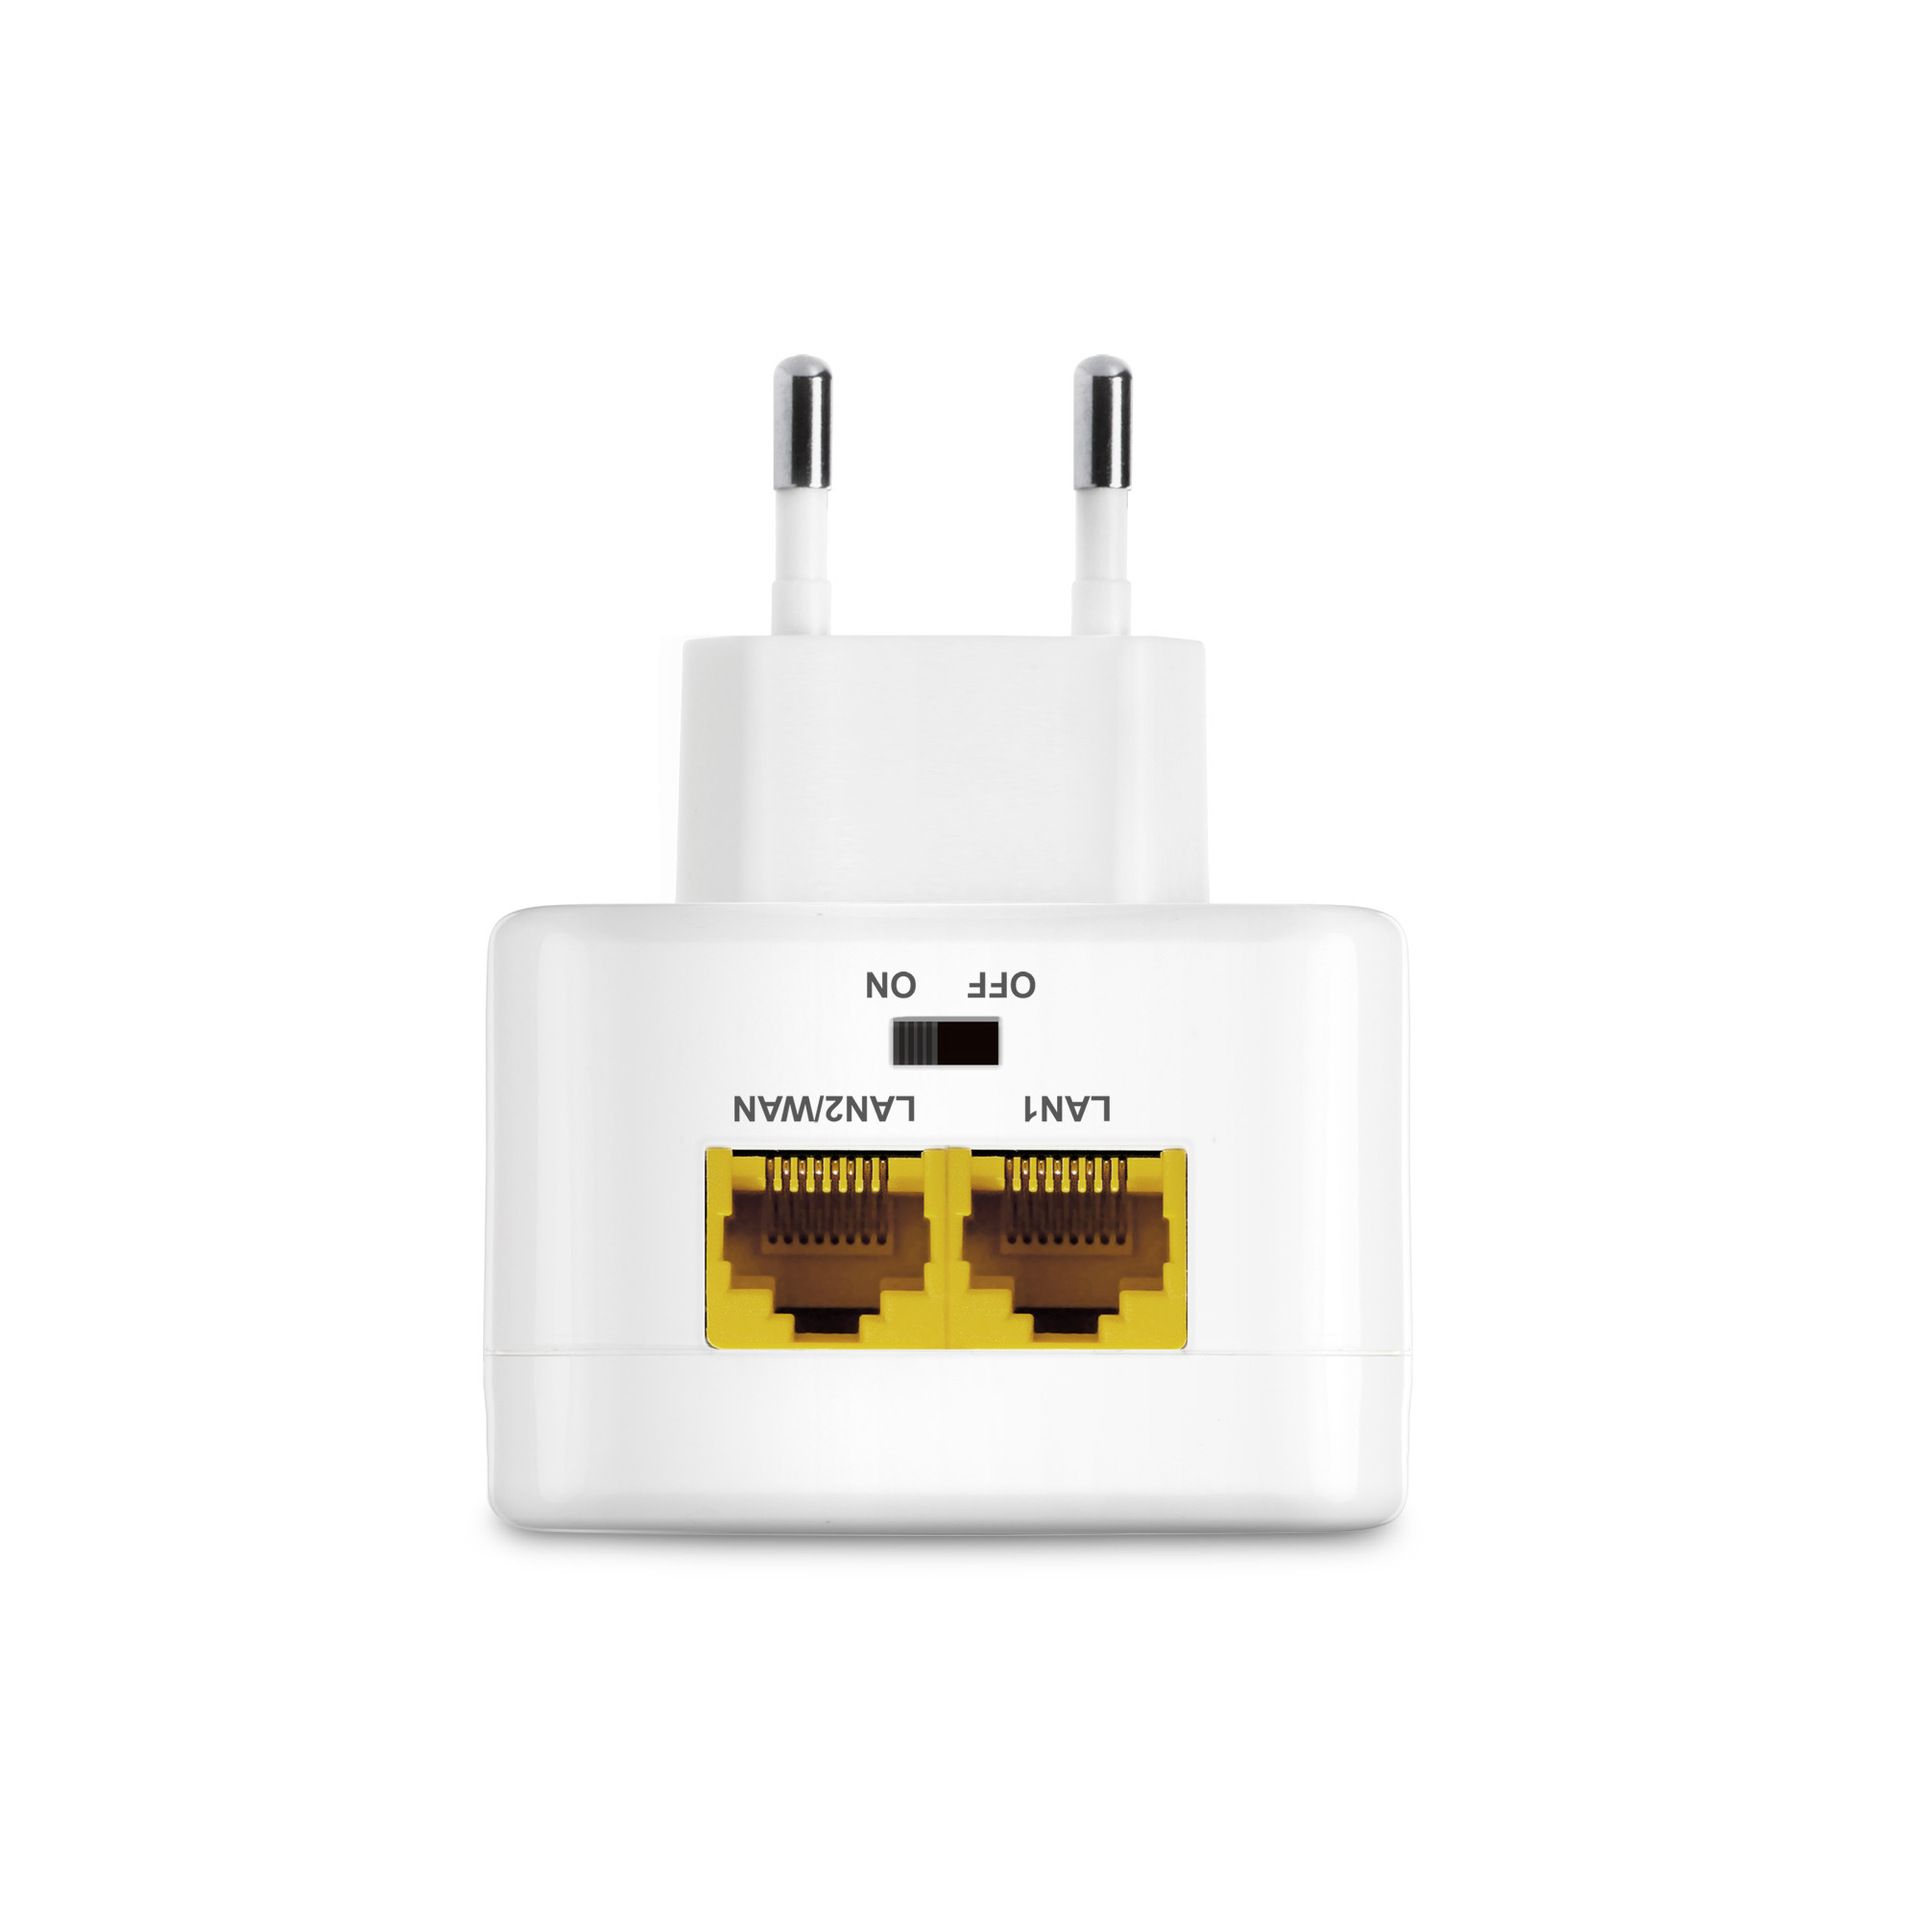 Network-Adapter-Powerline-Ethernet-Adapter-Plug-and-Play-Homeplug-WiFi-Extender-1-Pair-1739563